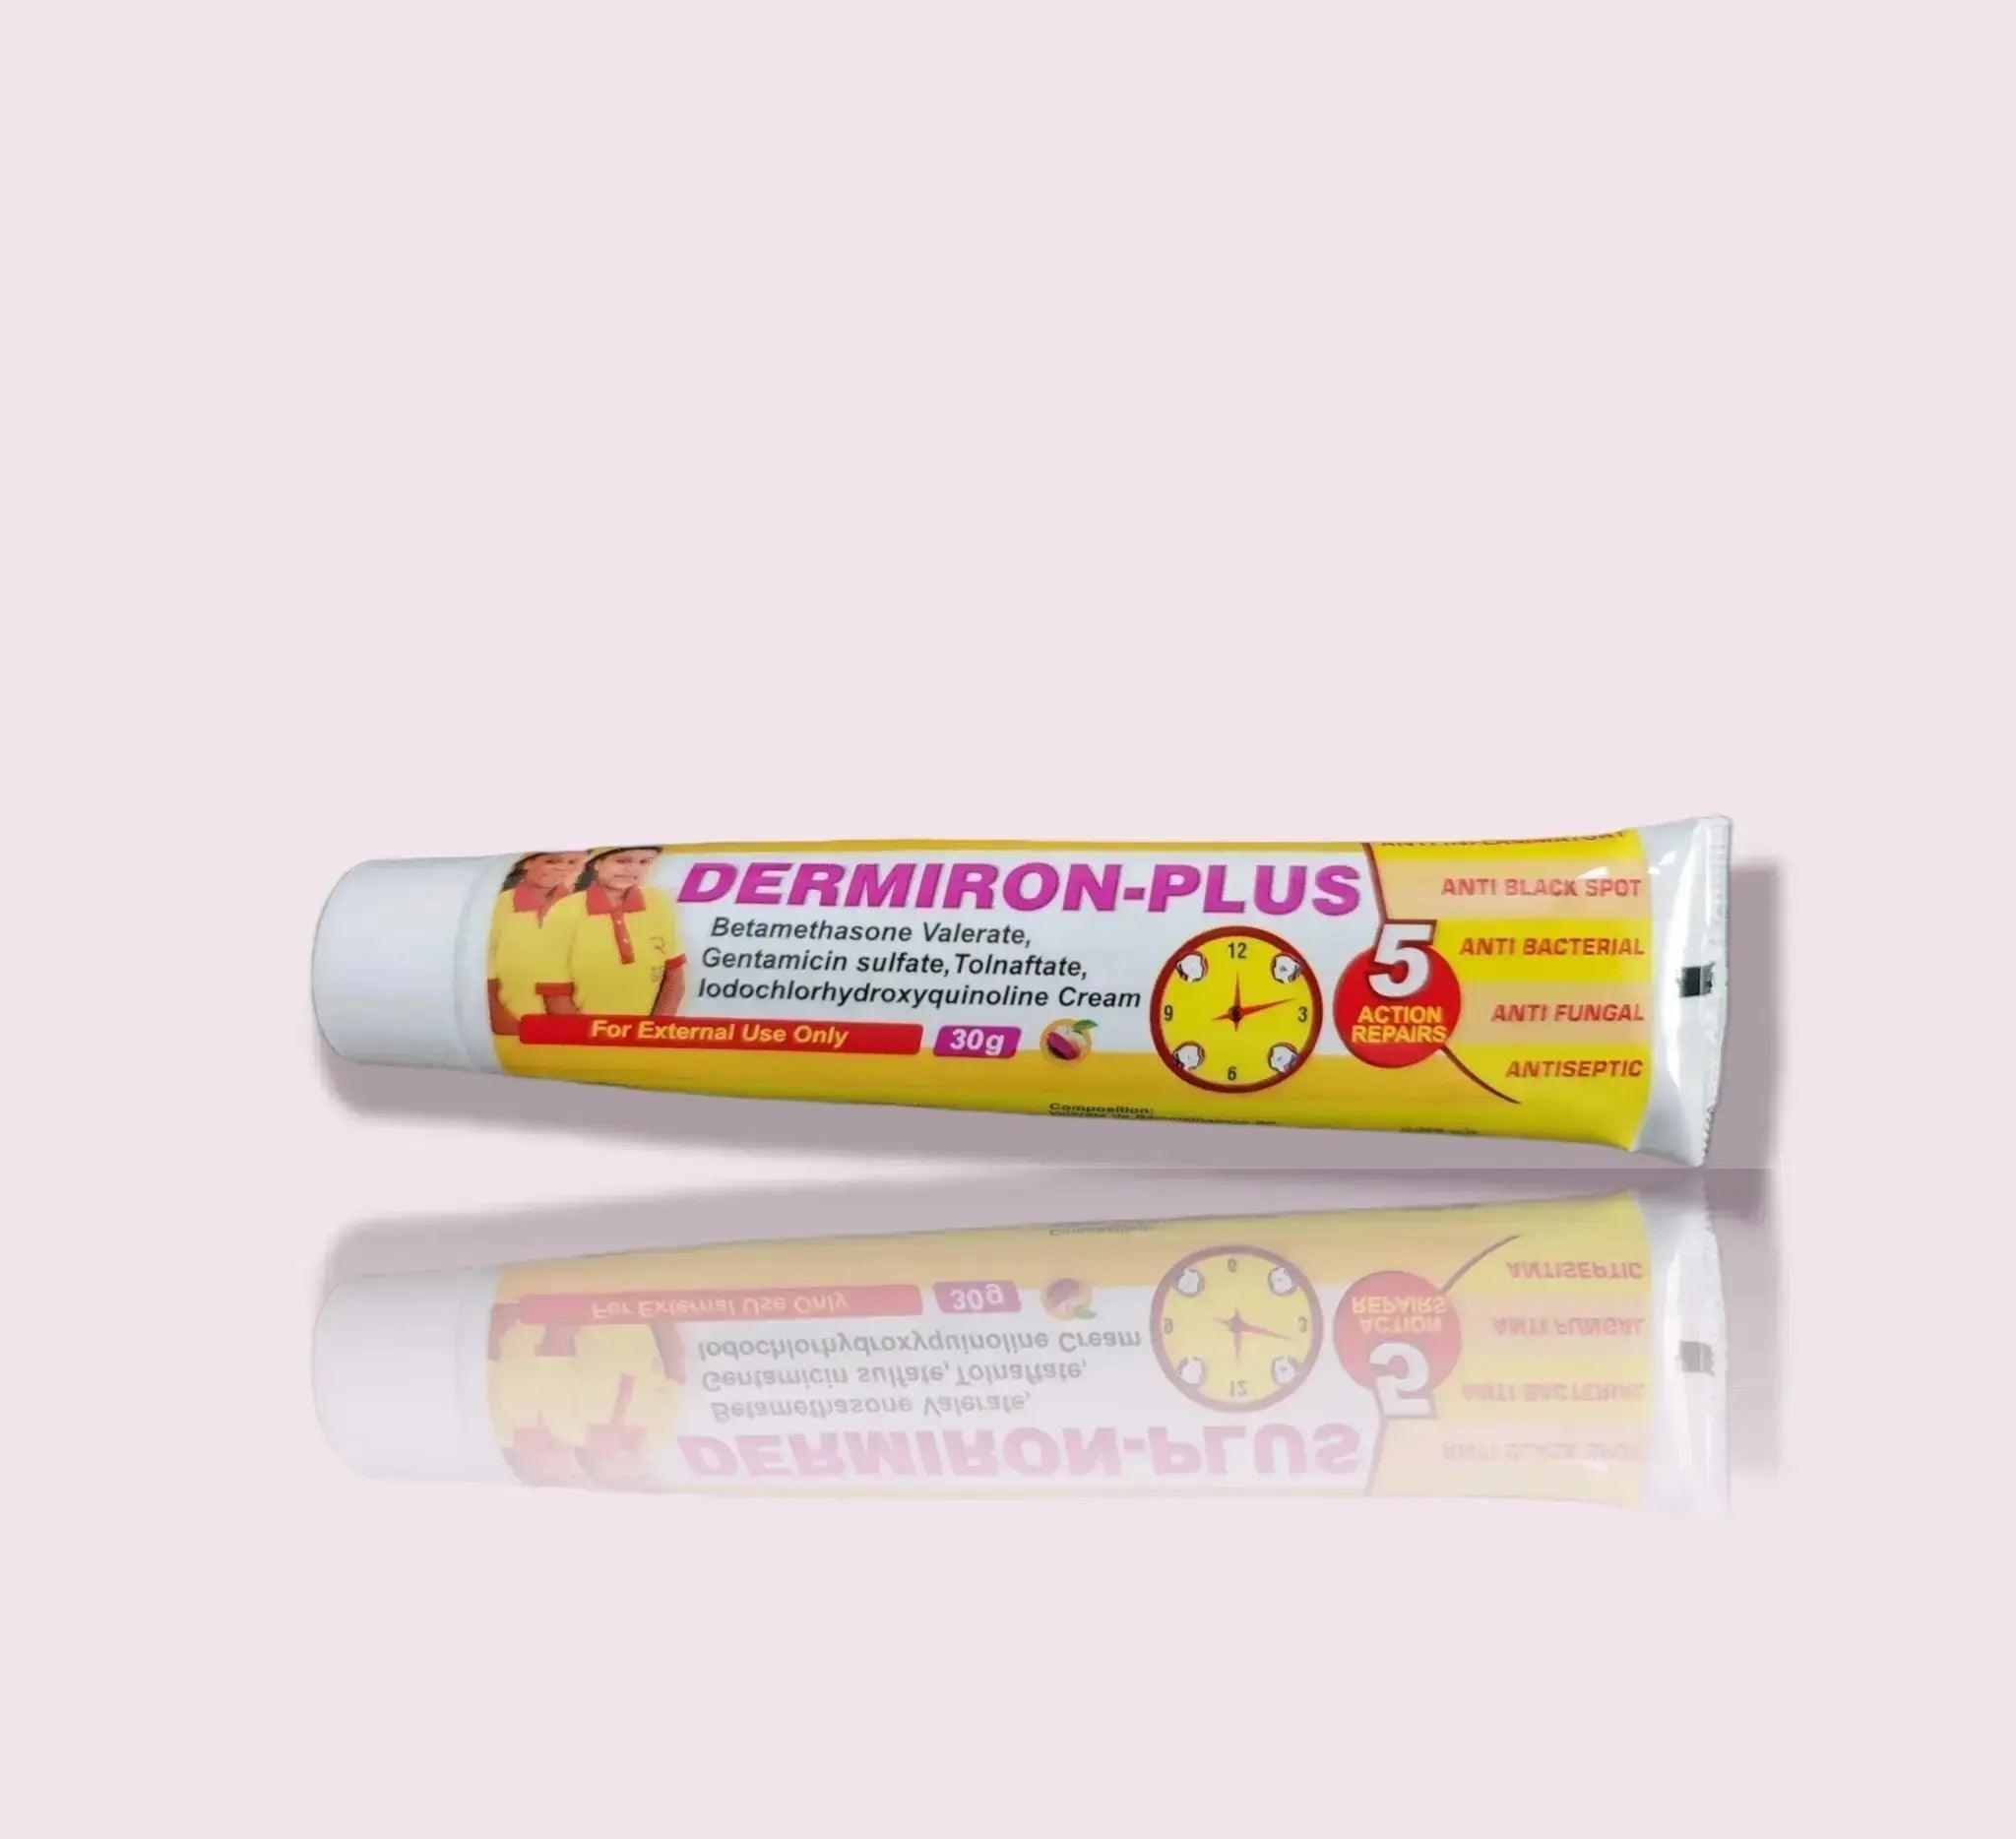 Dermiron-Plus Anti-Inflammatory, Anti-Black spot, Anti-Bacterial, Anti-Fungal, Antiseptic Cream - Honesty Sales U.K